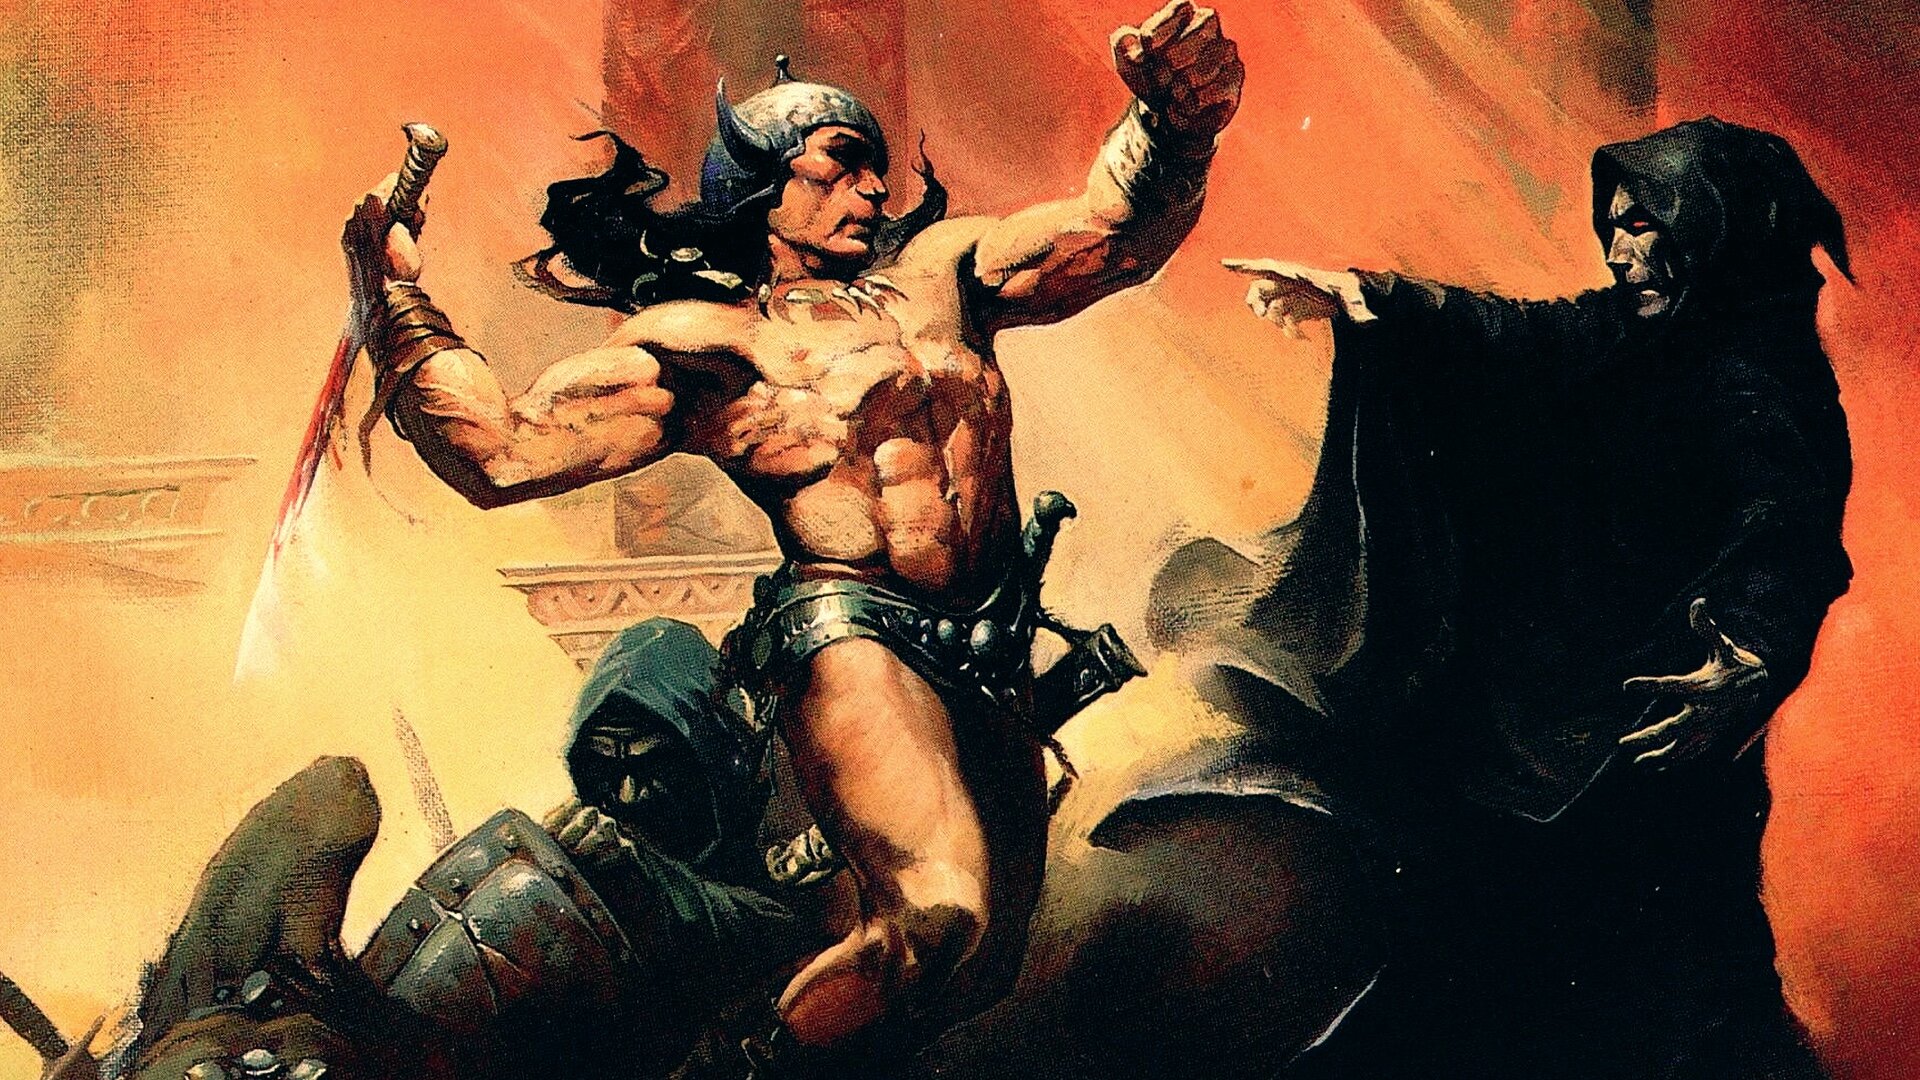 Conan The Barbarian Show Coming To Netflix